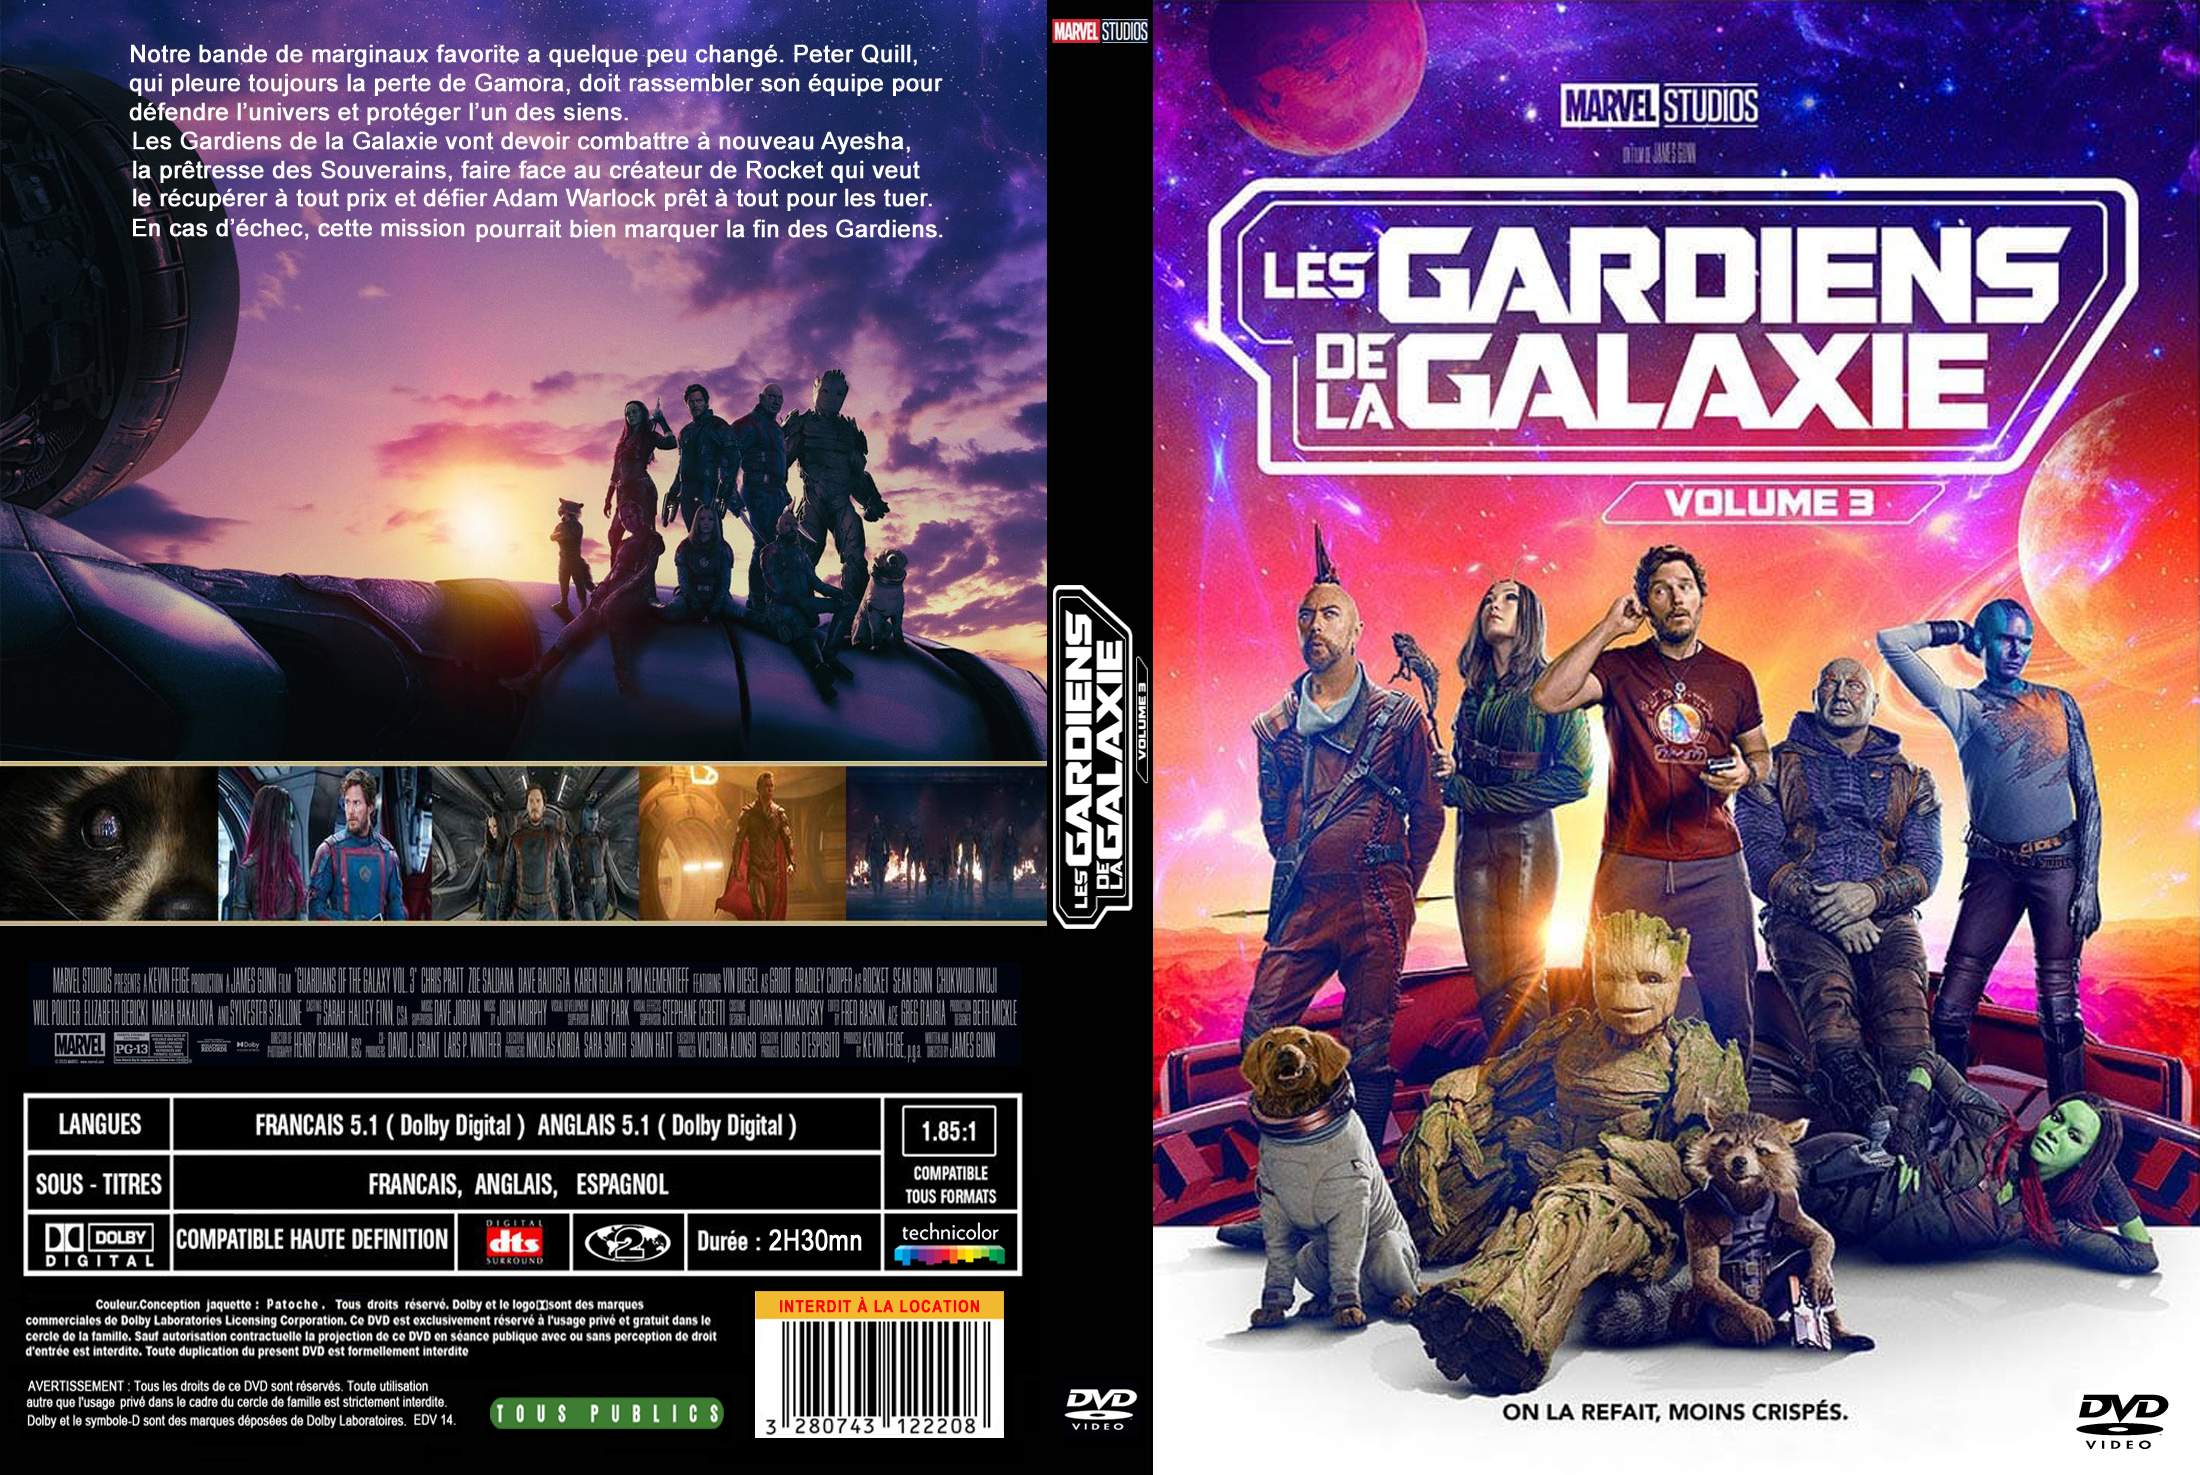 Jaquette DVD Les Gardiens de la Galaxie 3 custom